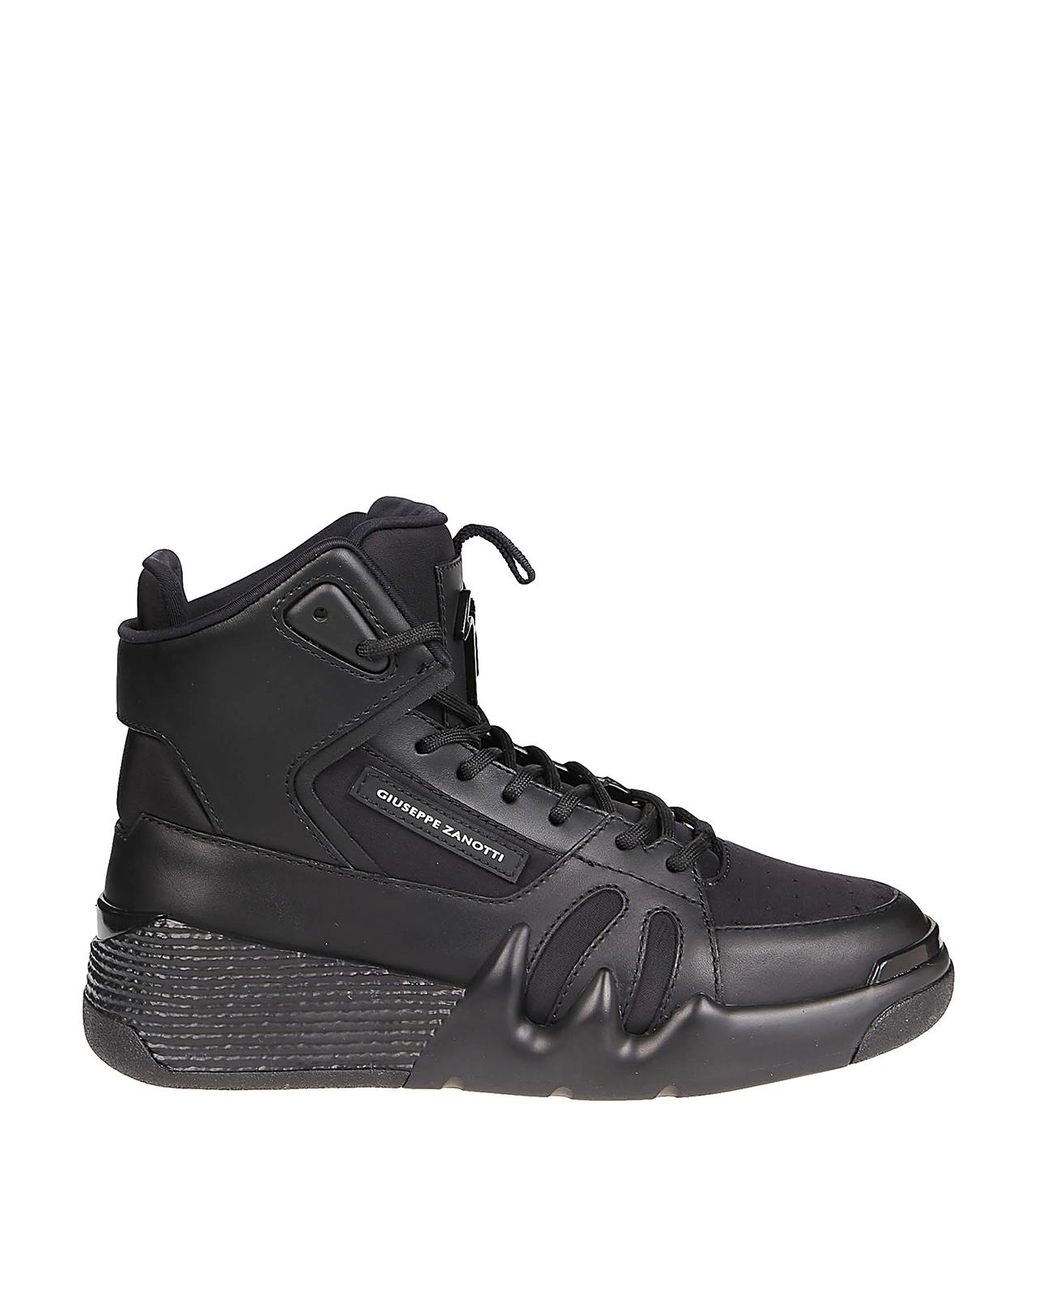 Giuseppe Zanotti Leather Talon High Top Sneakers in Black for Men - Lyst